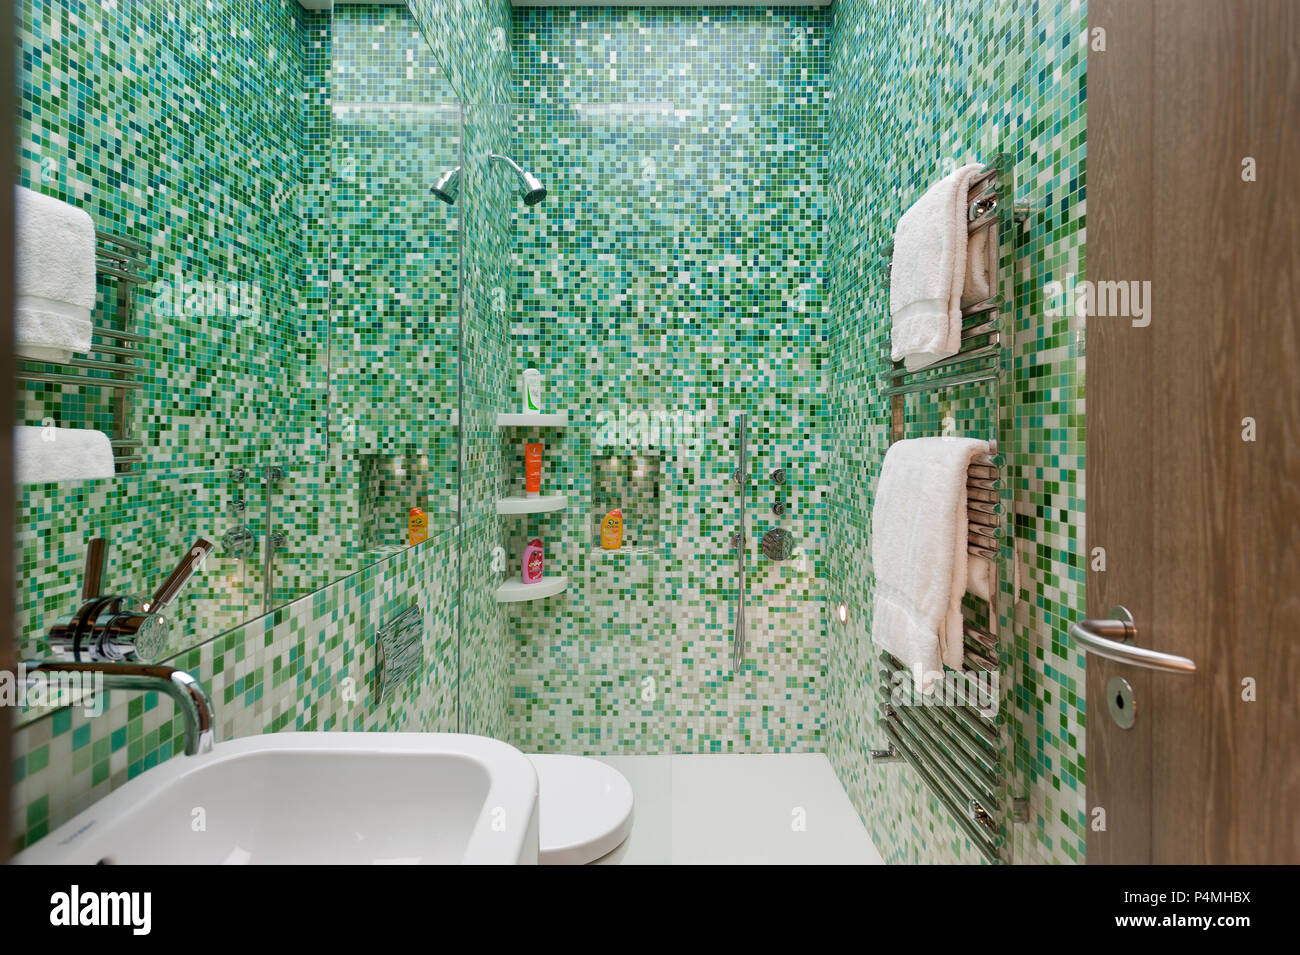 Grüne Fliesen im modernen Badezimmer Stockfotografie - Alamy